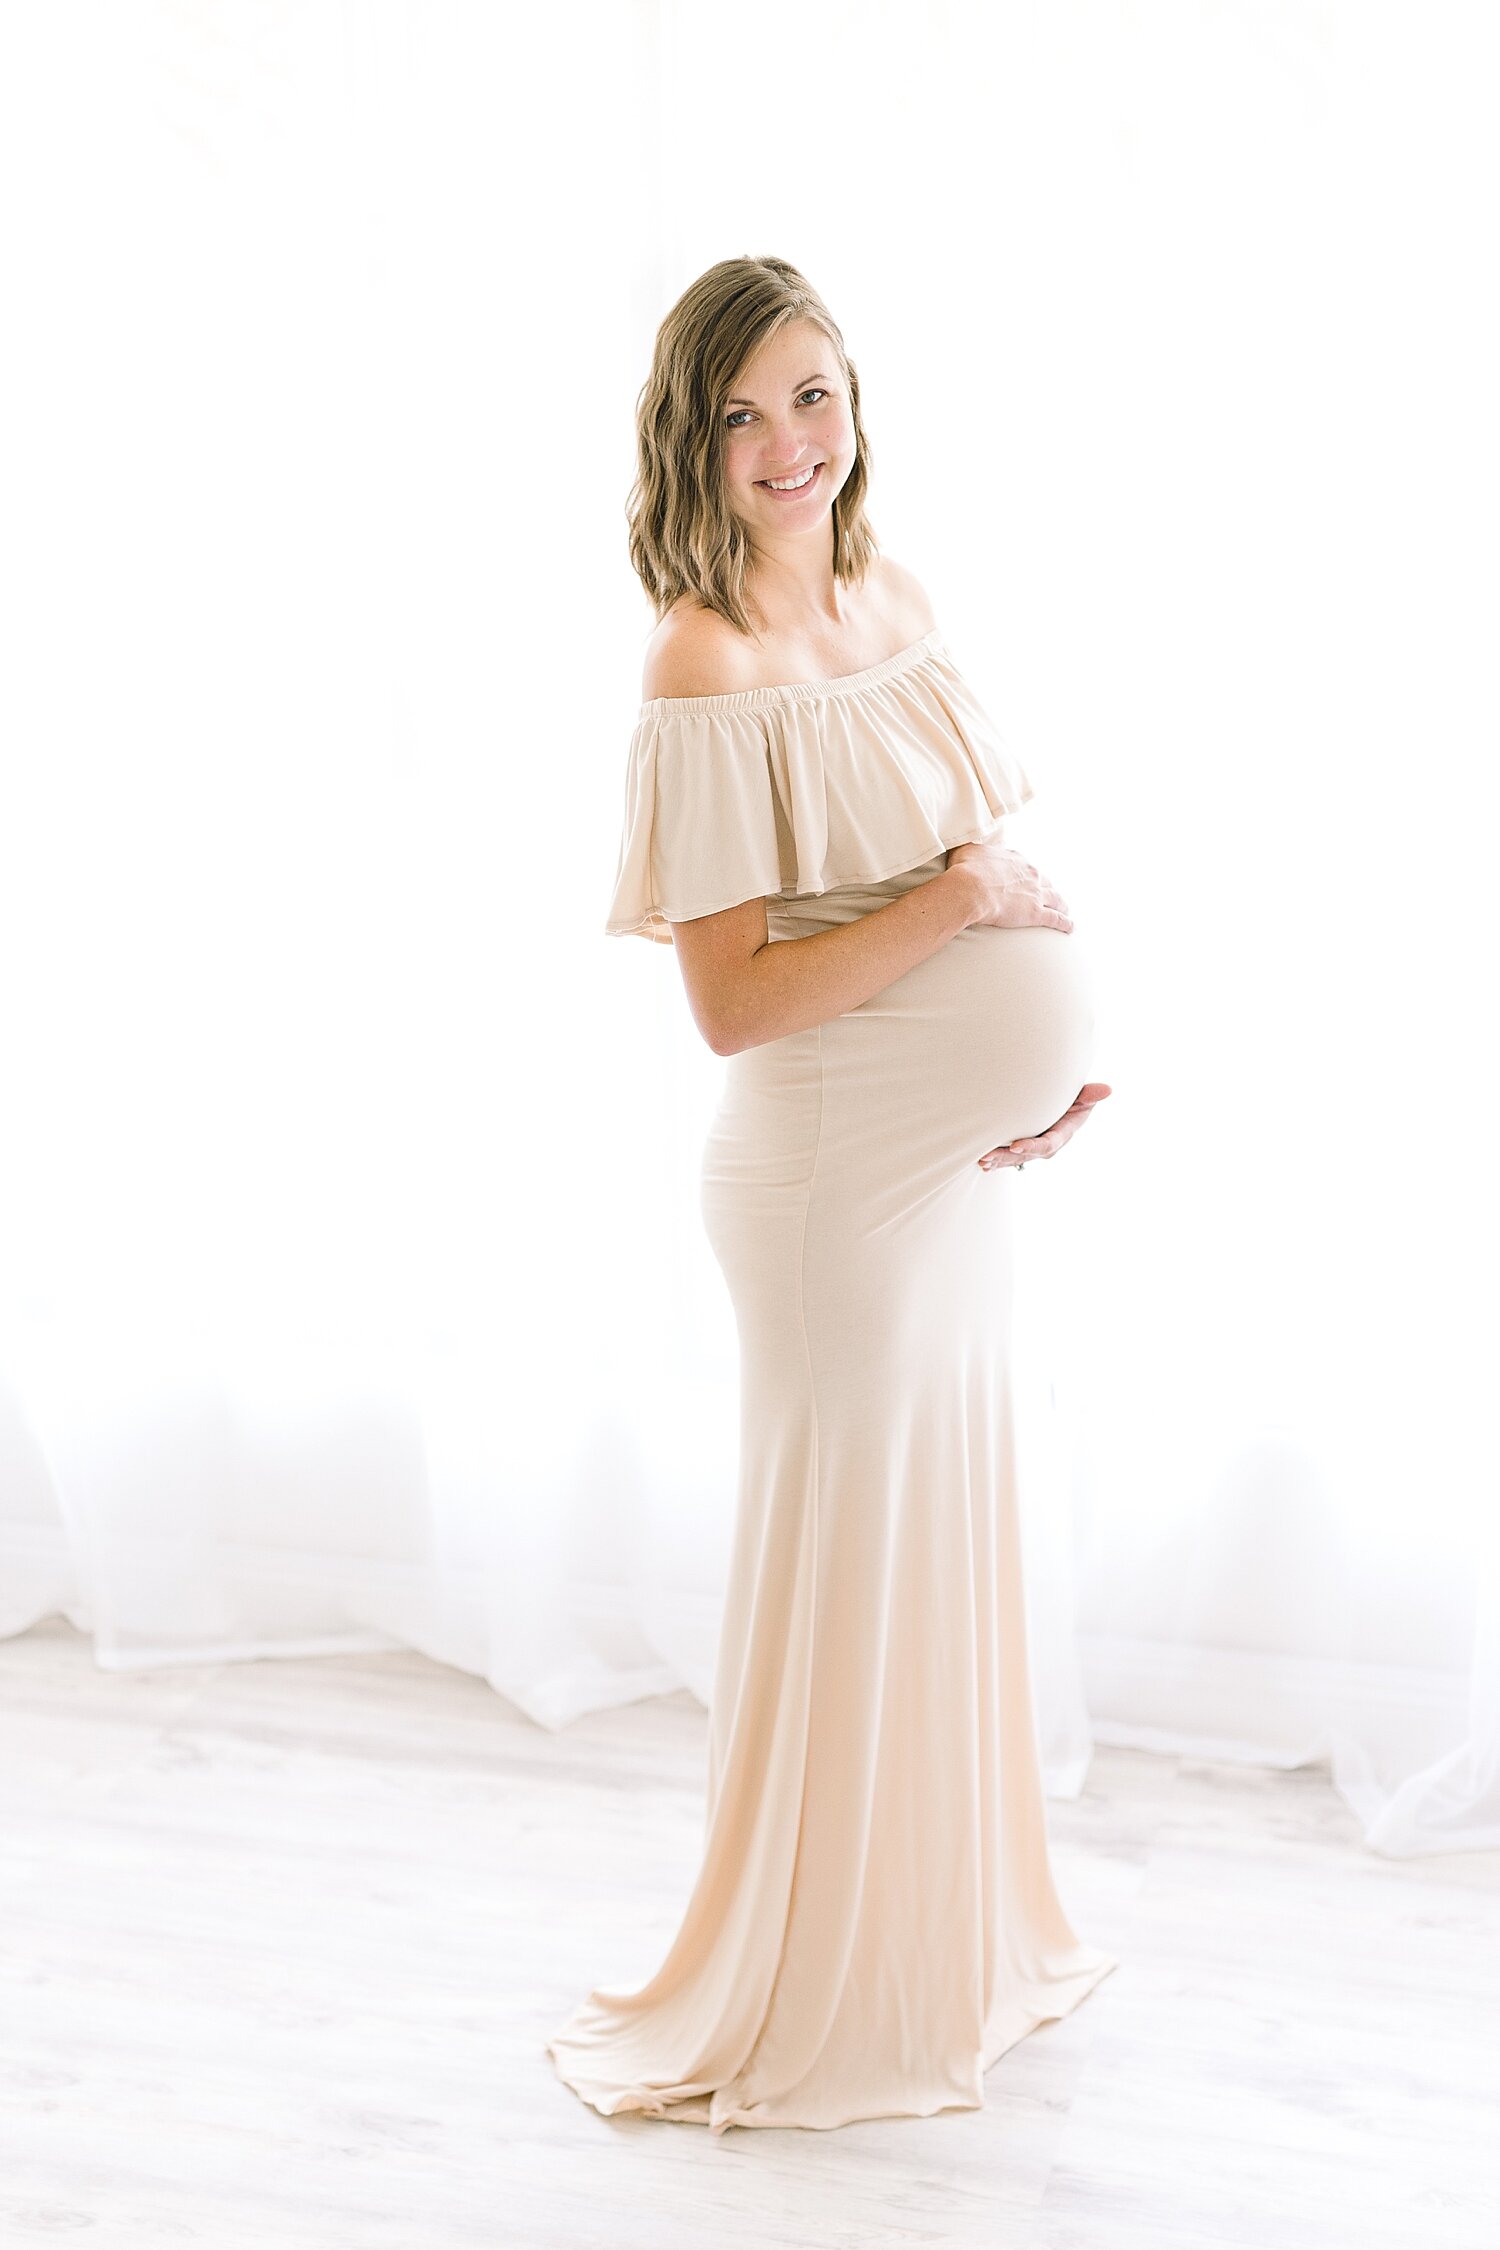 Studio maternity photography in Newport Beach, CA | Ambre Williams Photography